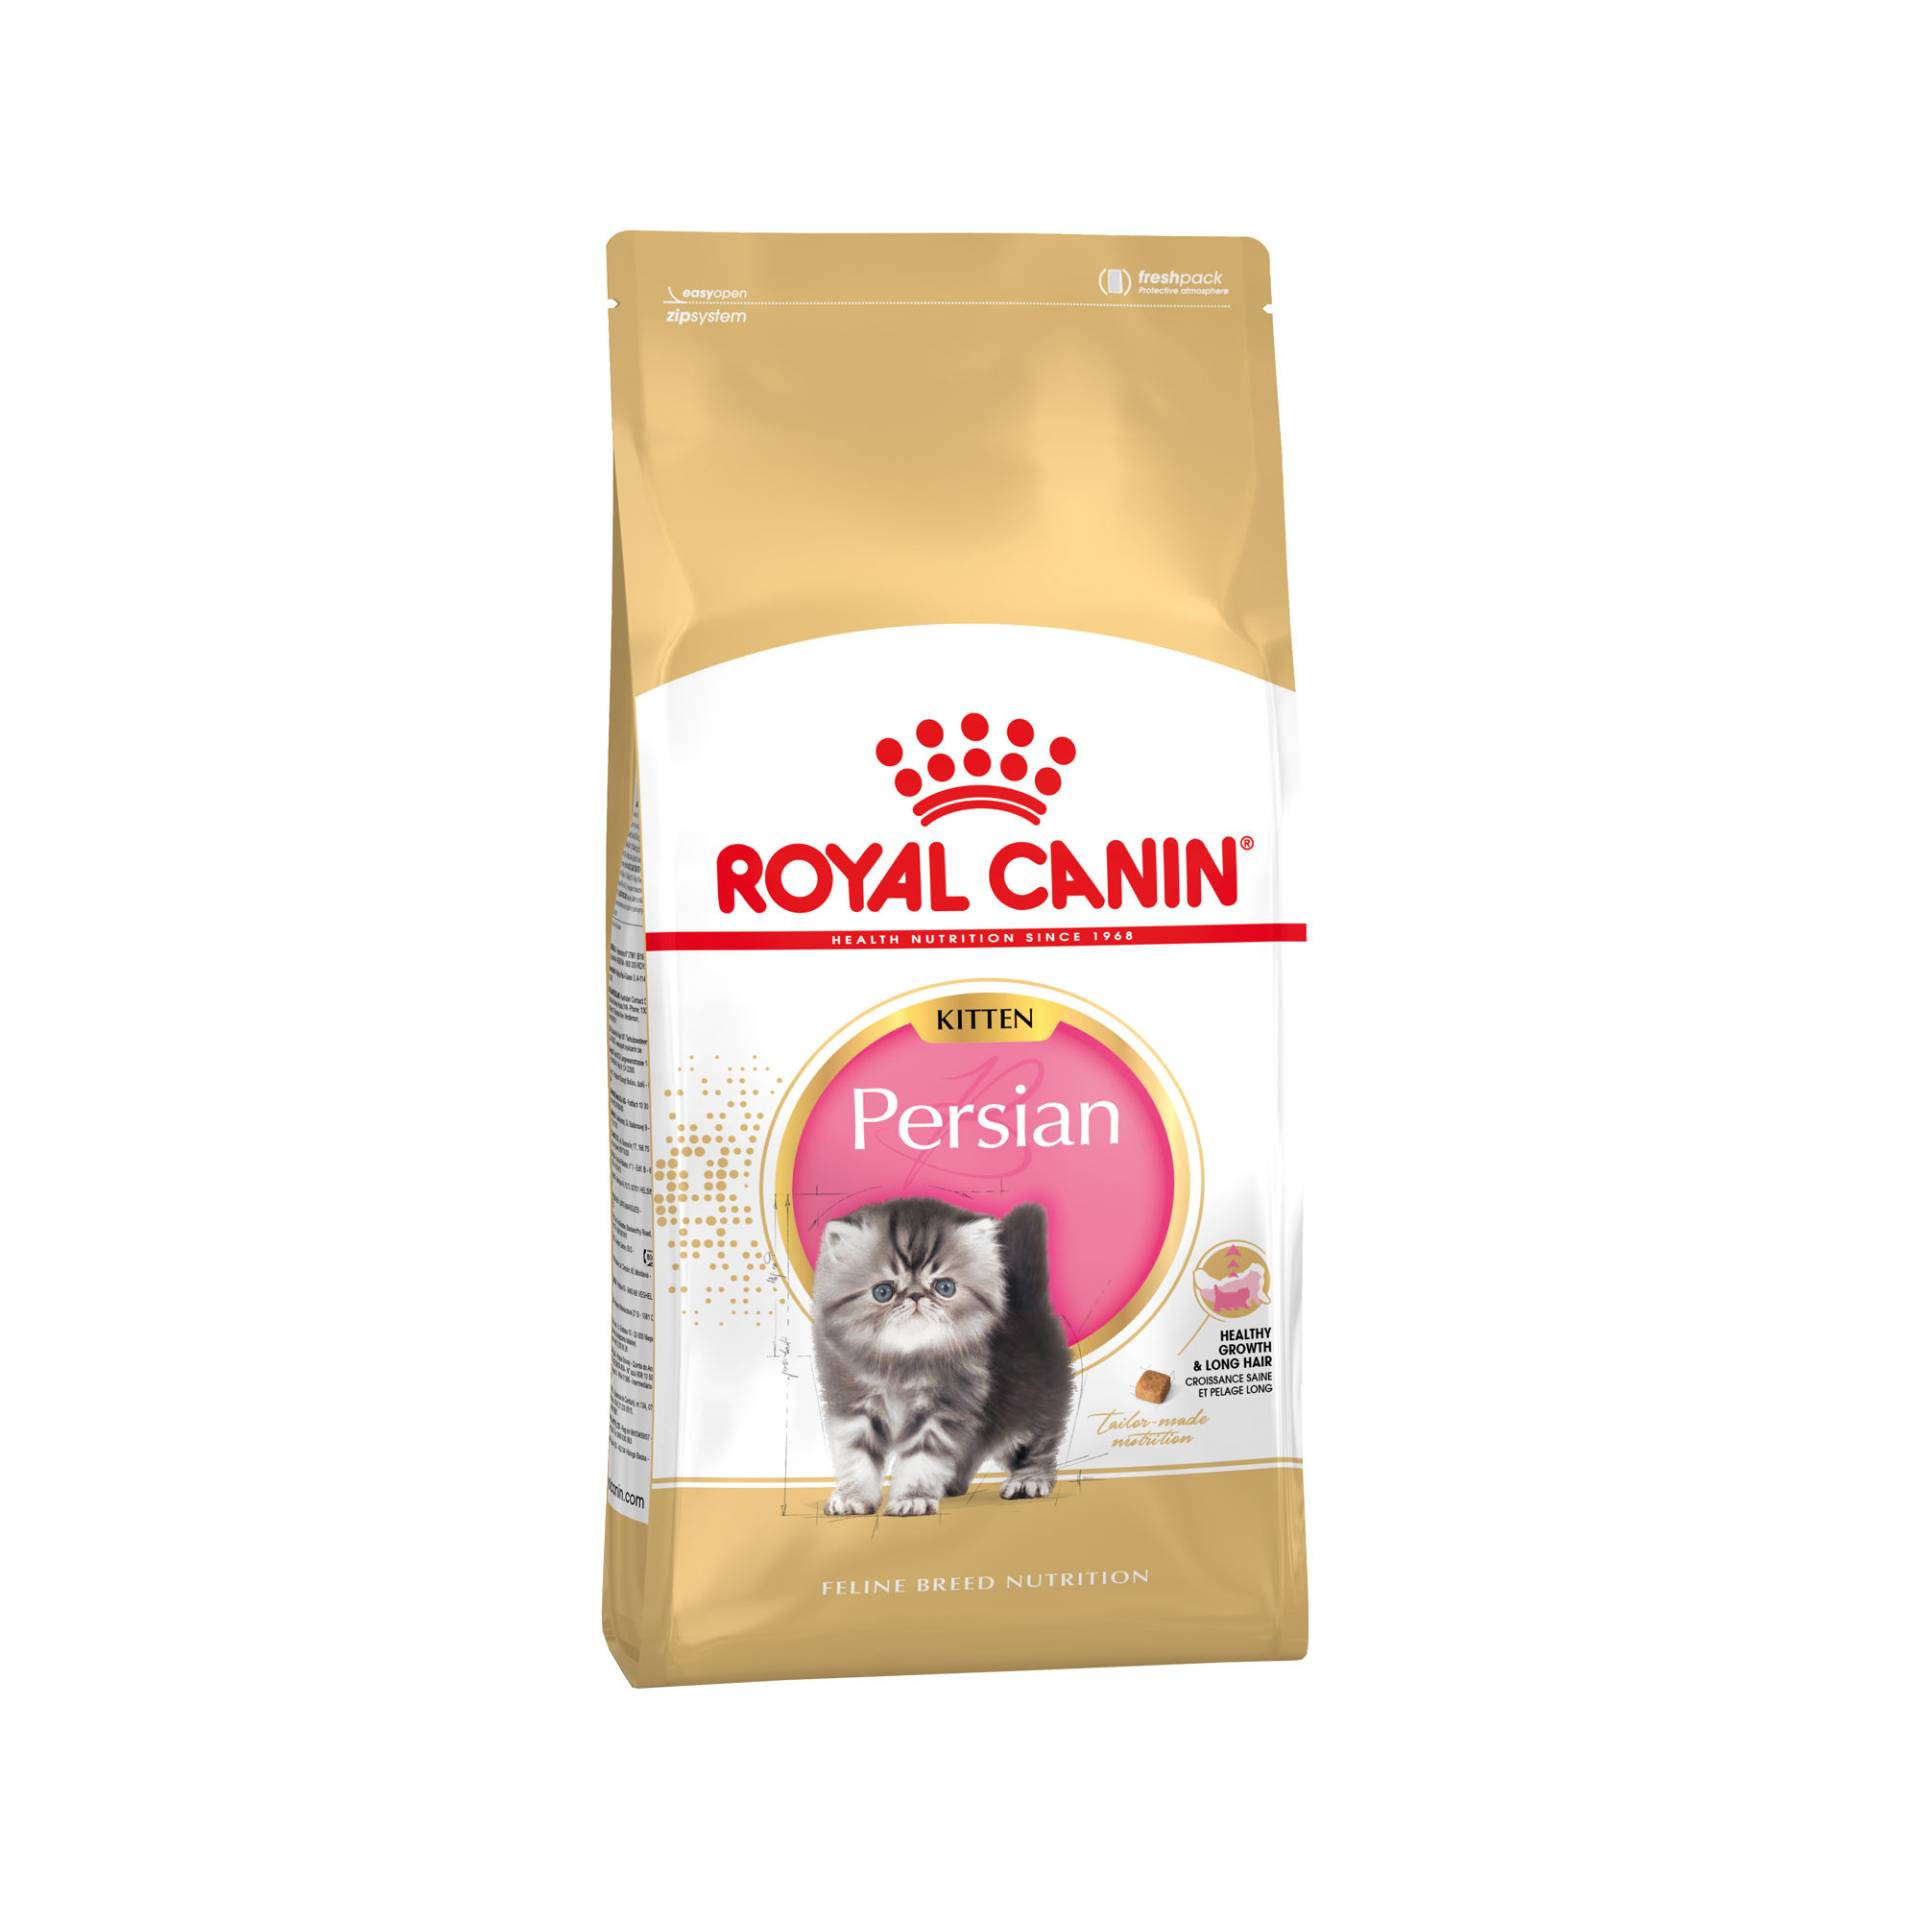 Royal Canin Persian Kitten Katzenfutter - 10 kg von Royal Canin